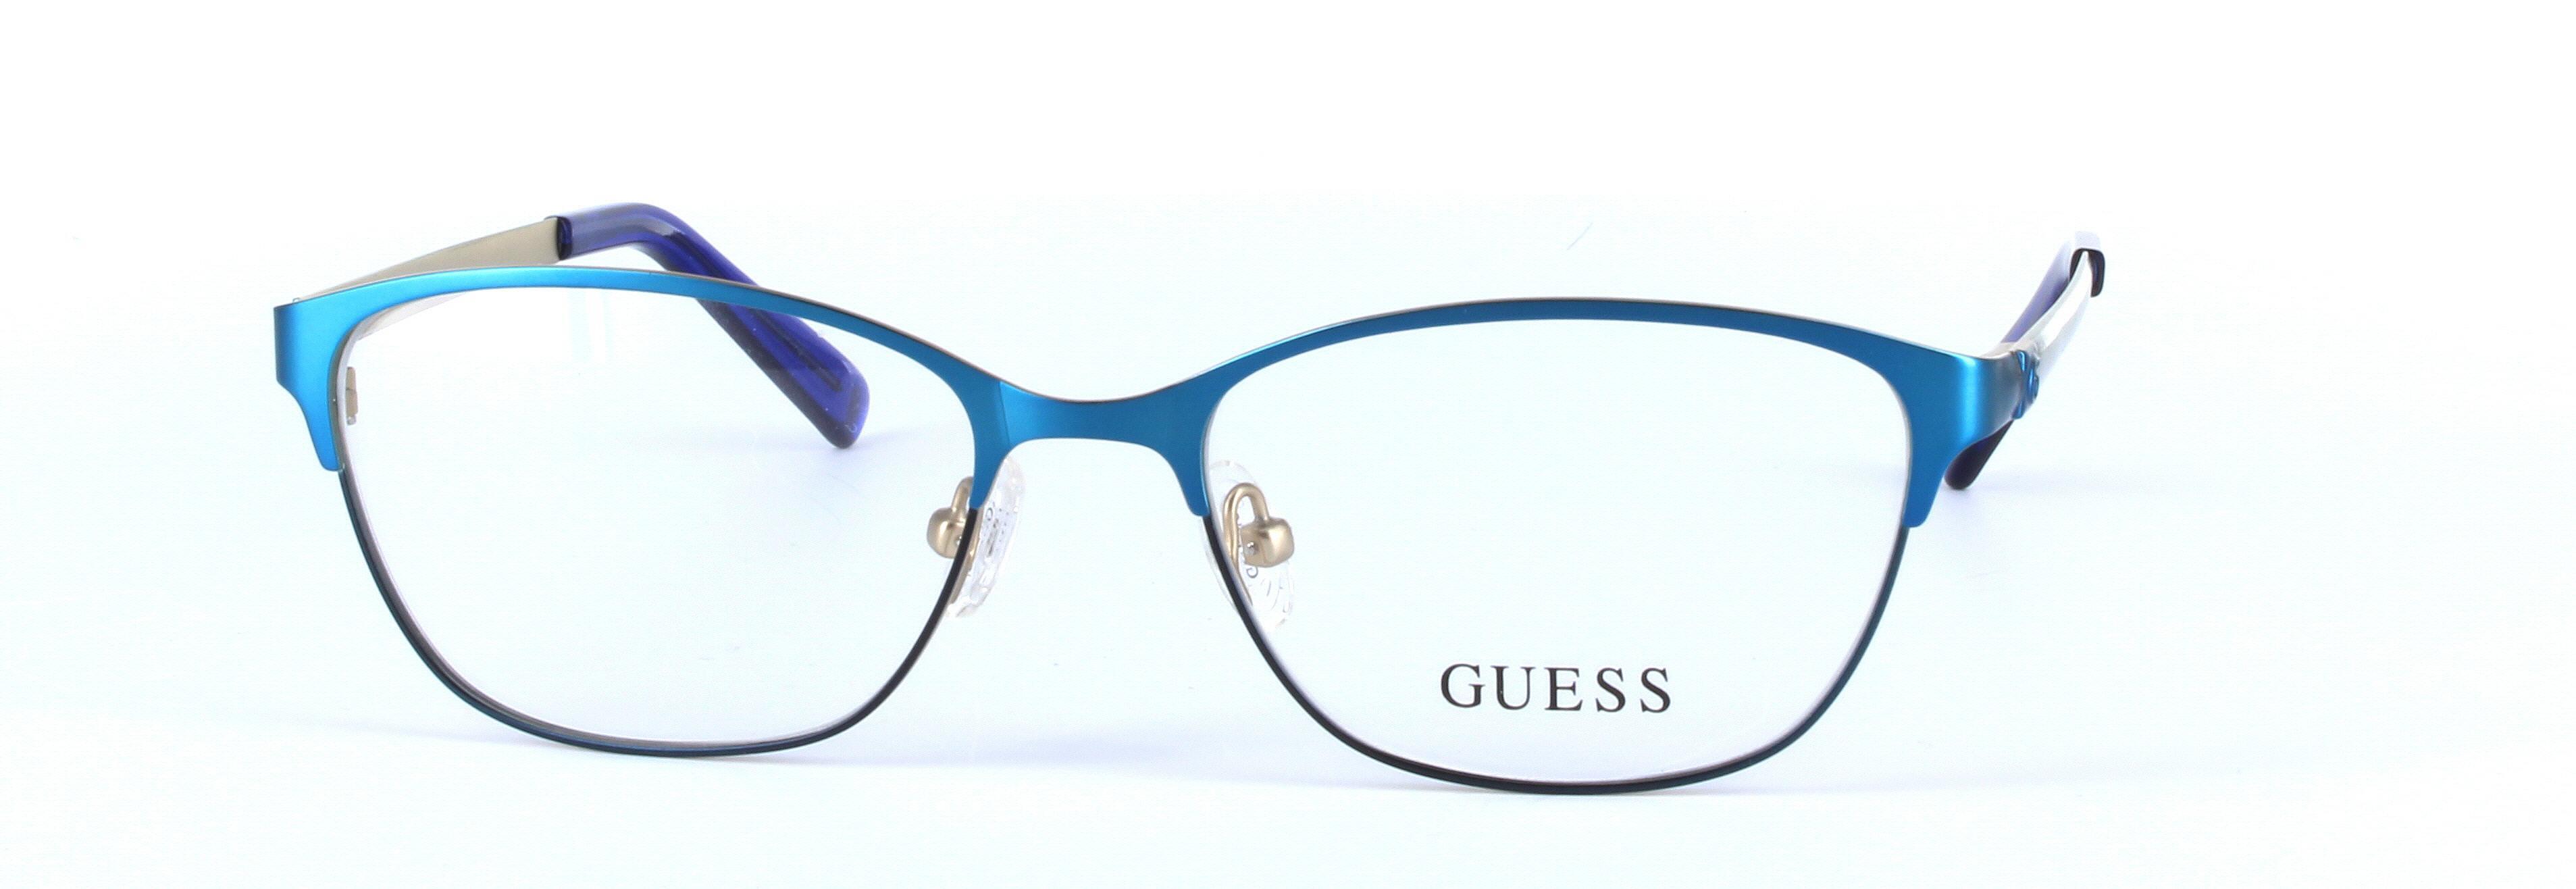 GUESS (GU2499-091) Blue Full Rim Oval Metal Glasses - Image View 5